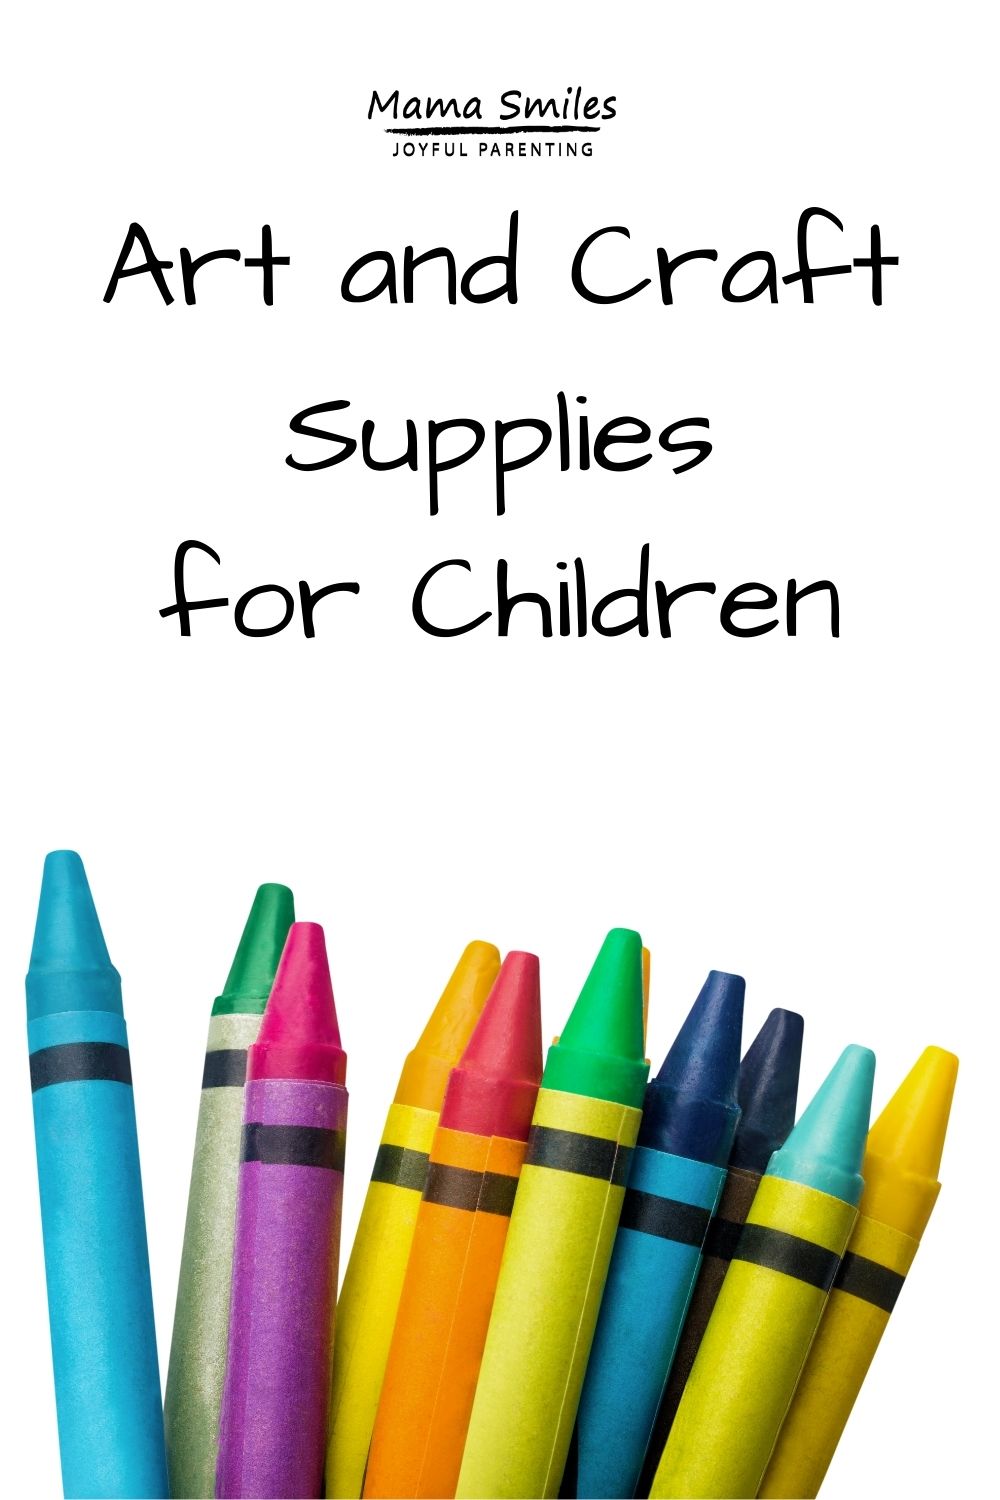 Arts and Crafts Supplies for Kids - Mama Smiles - Joyful Parenting